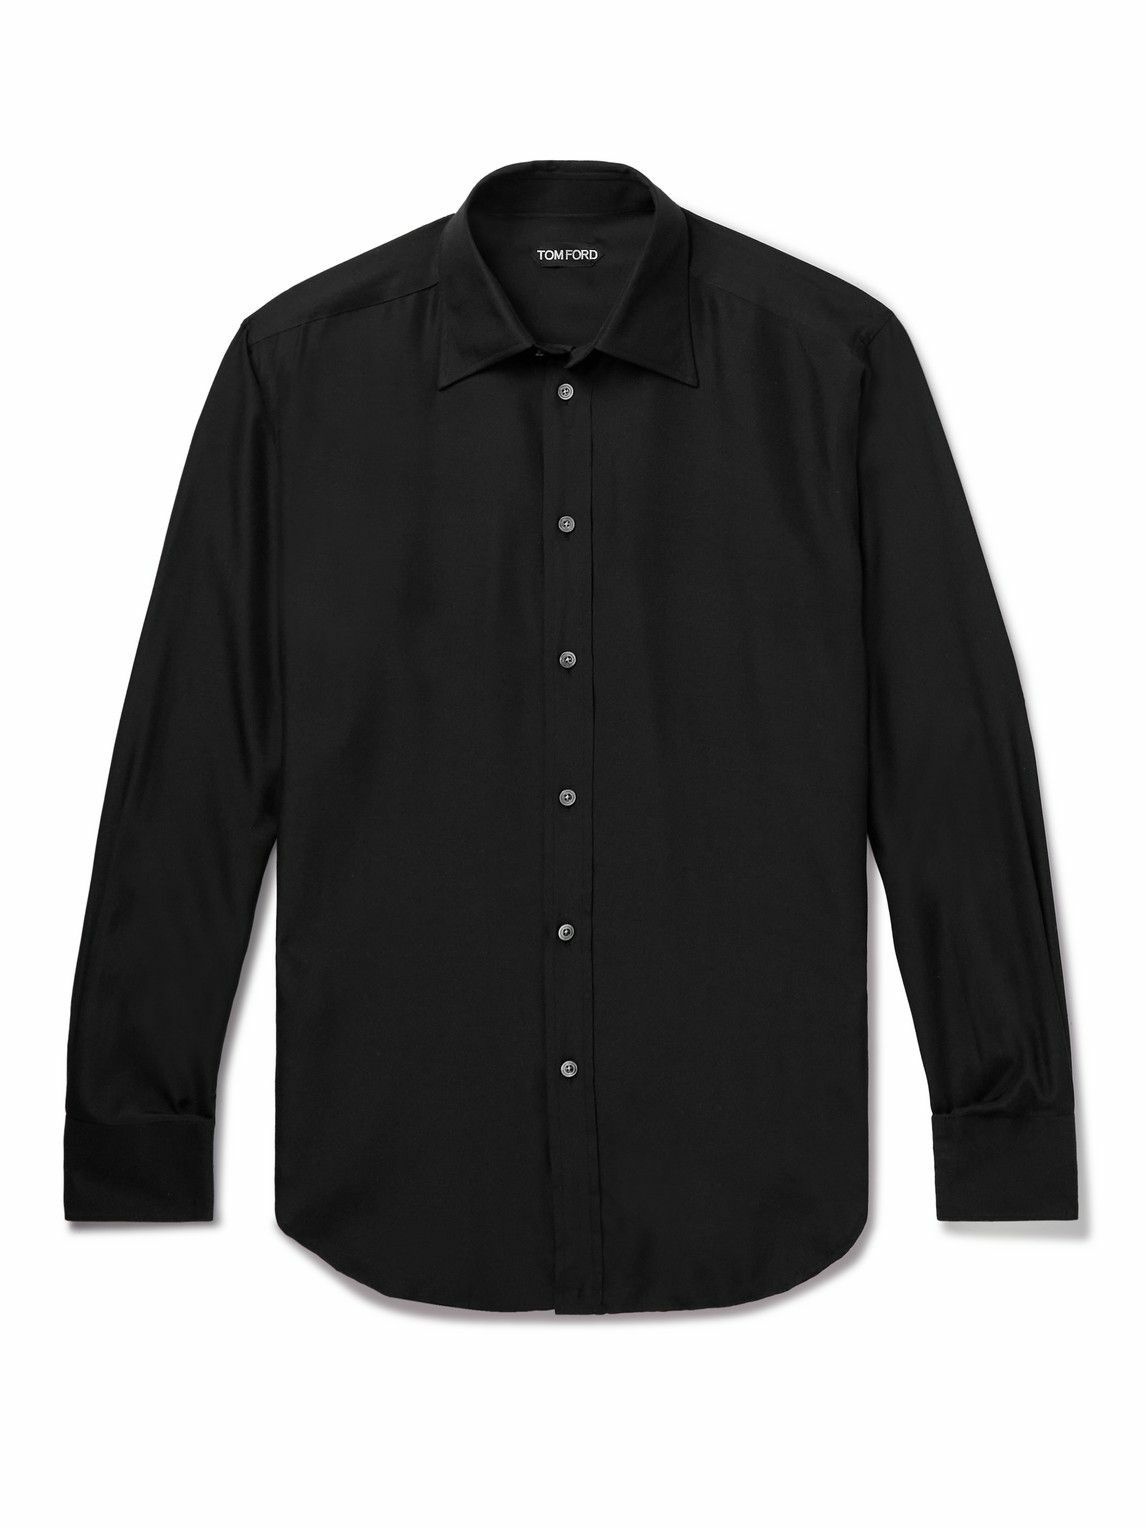 TOM FORD - Cutaway-Collar Silk-Blend Shirt - Black TOM FORD